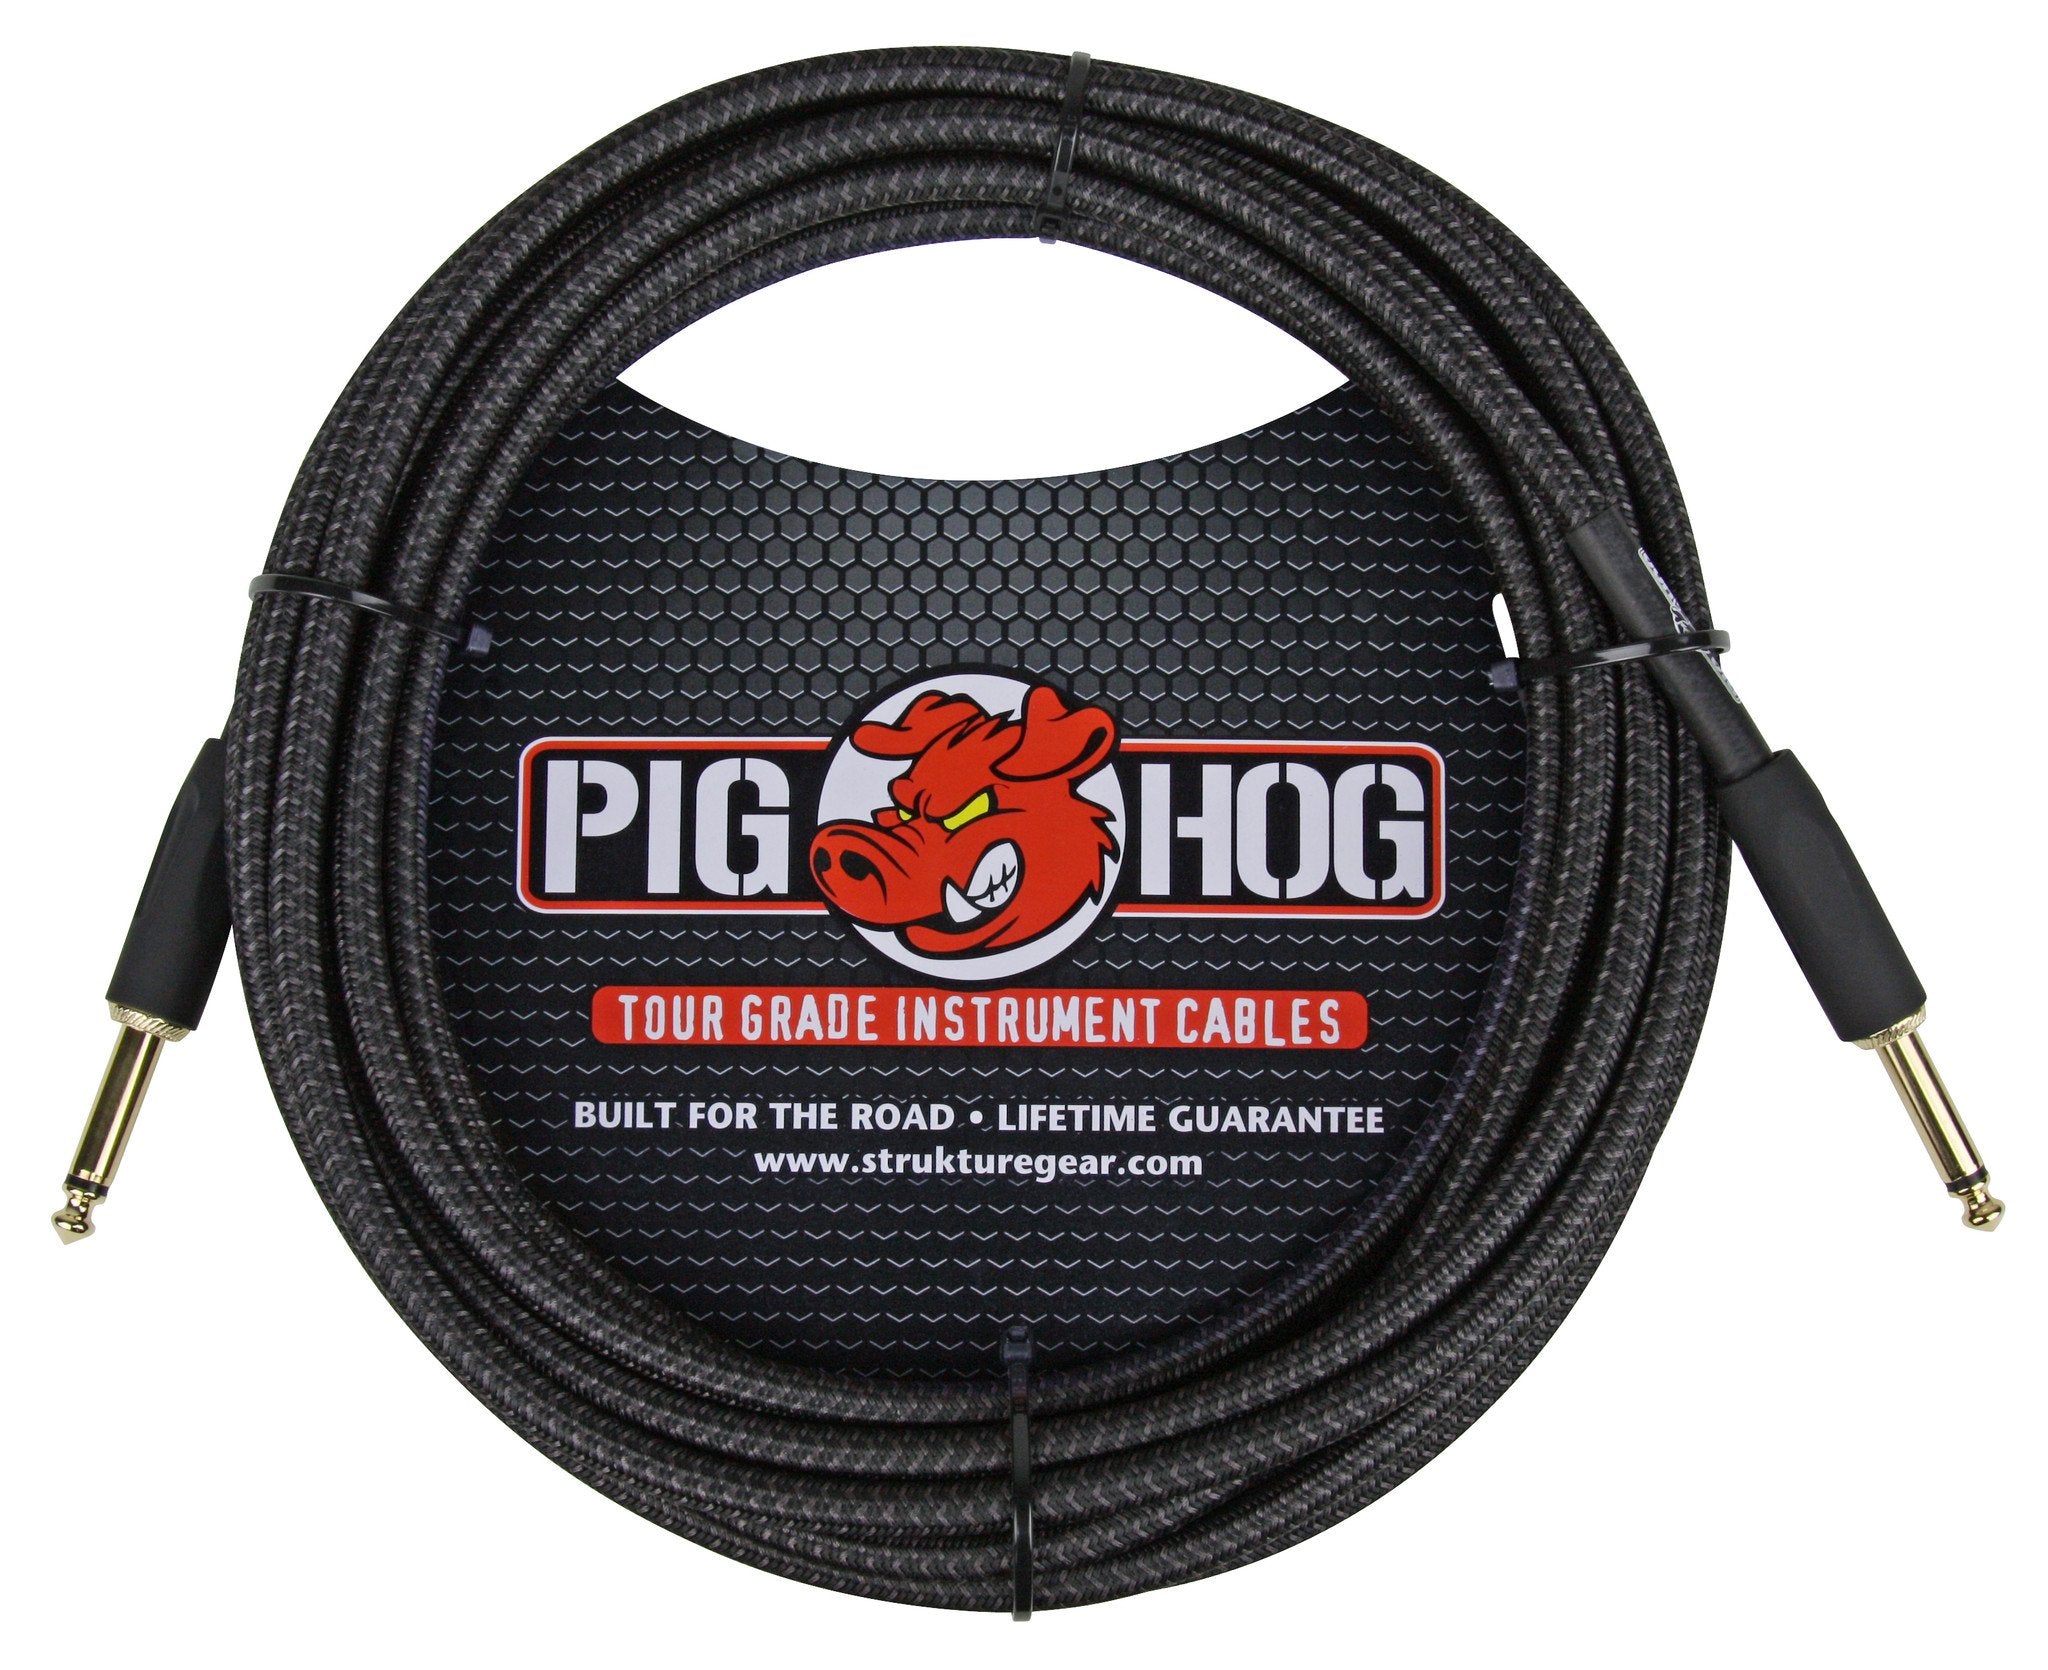 Pig Hog 20' Black Woven Instrument Cable, Straight 1/4" Ends, Lifetime Warranty